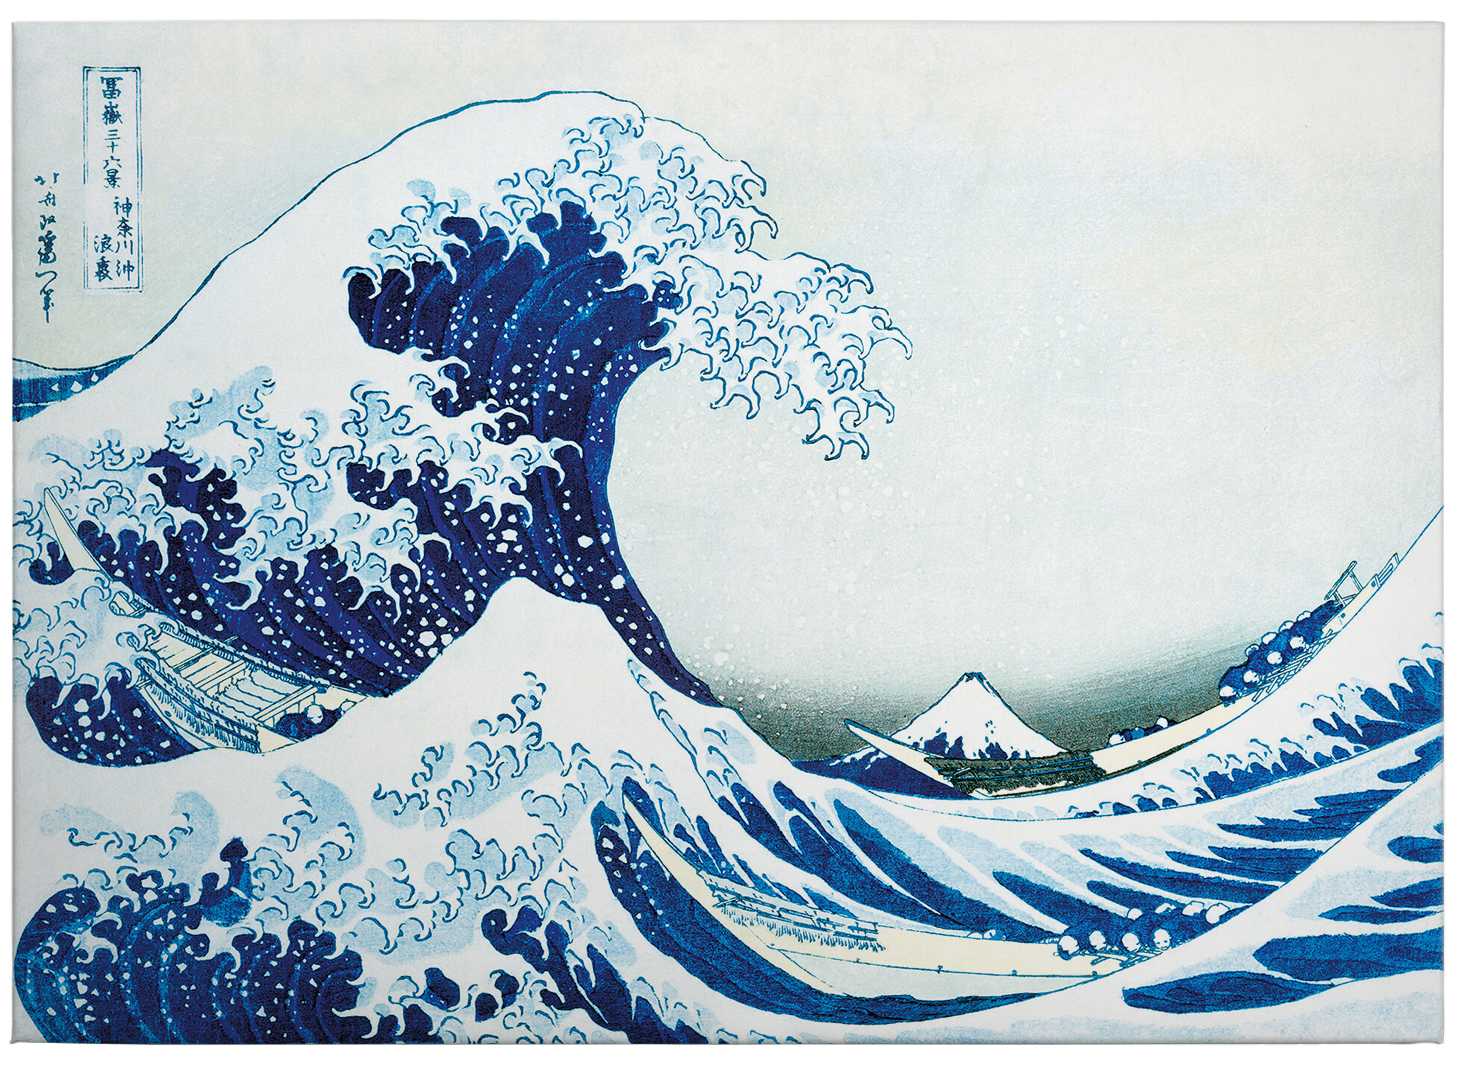             Quadro su tela "La grande onda di Kanagawa" di Hokusai - 0,70 m x 0,50 m
        